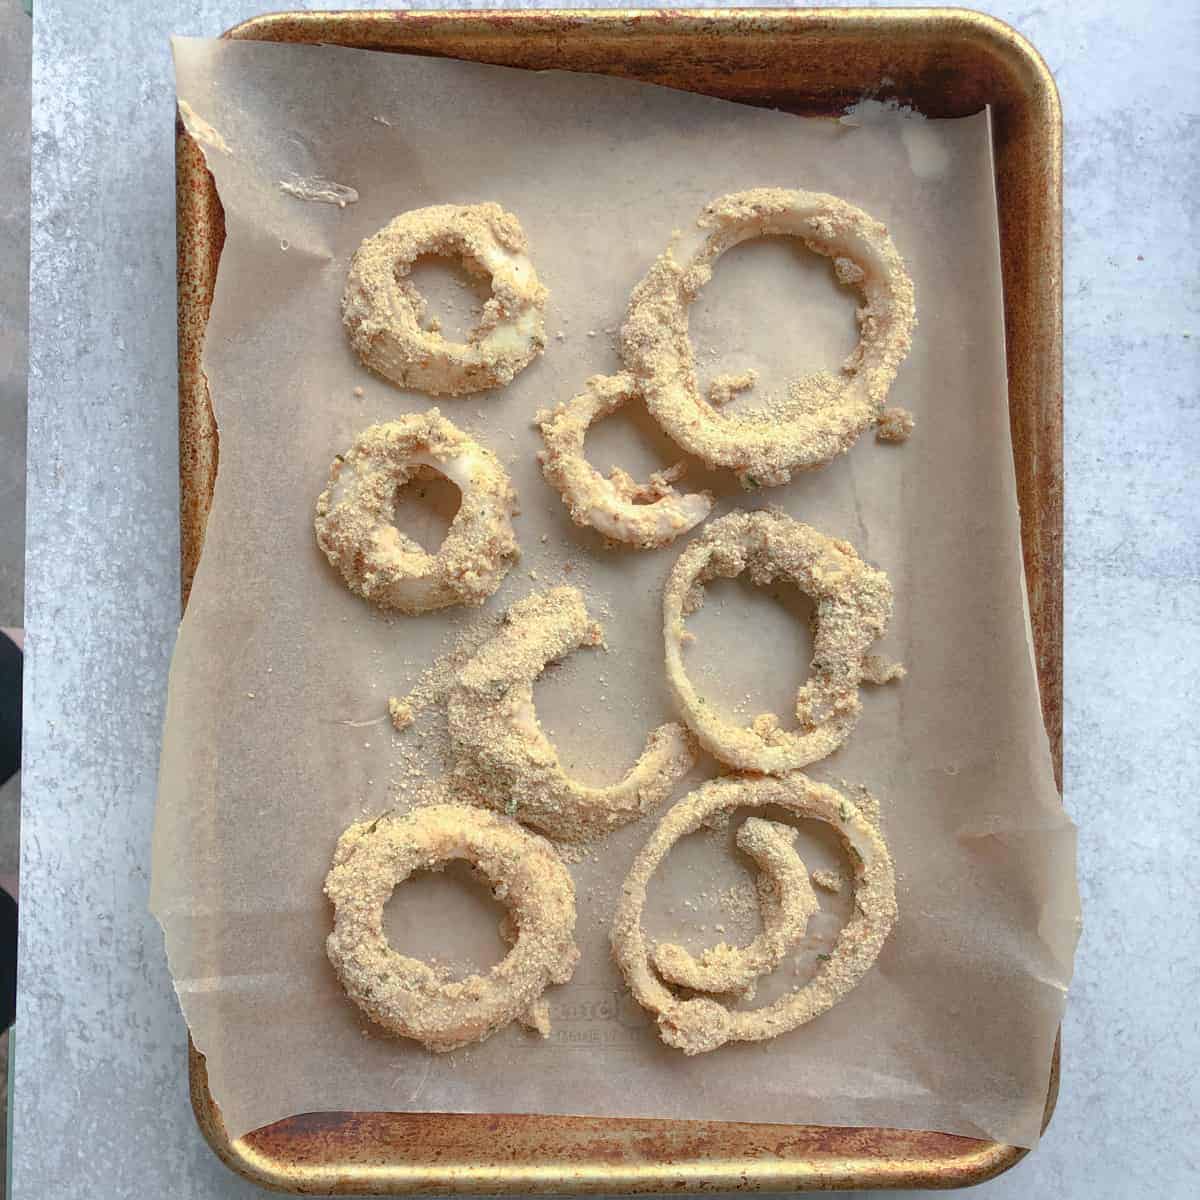 Onion rings on baking sheet.